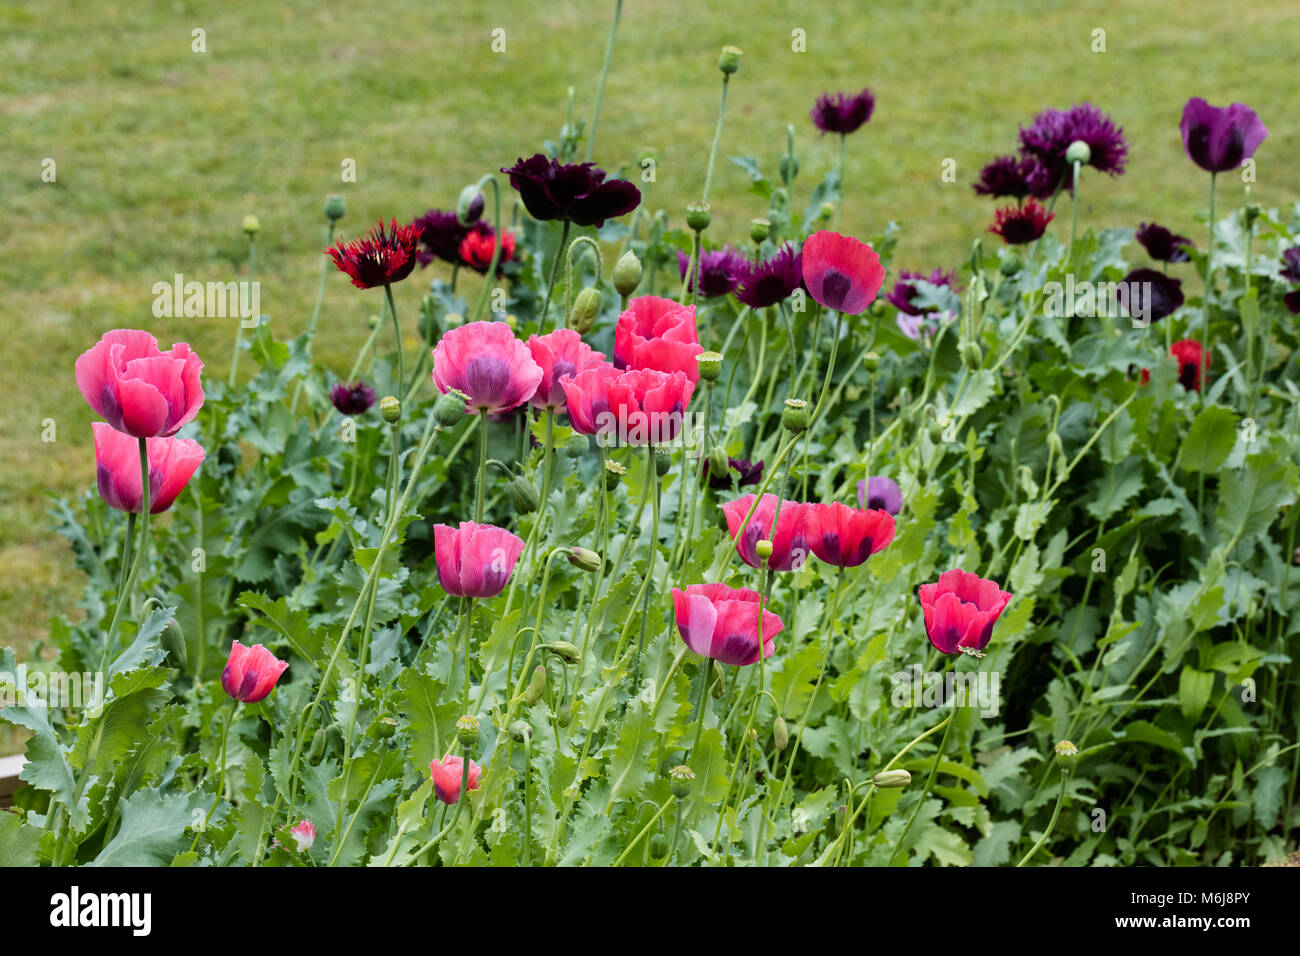 'The Giant' Opium Poppy, Pionvallmo (Papaver somniferum) Stock Photo